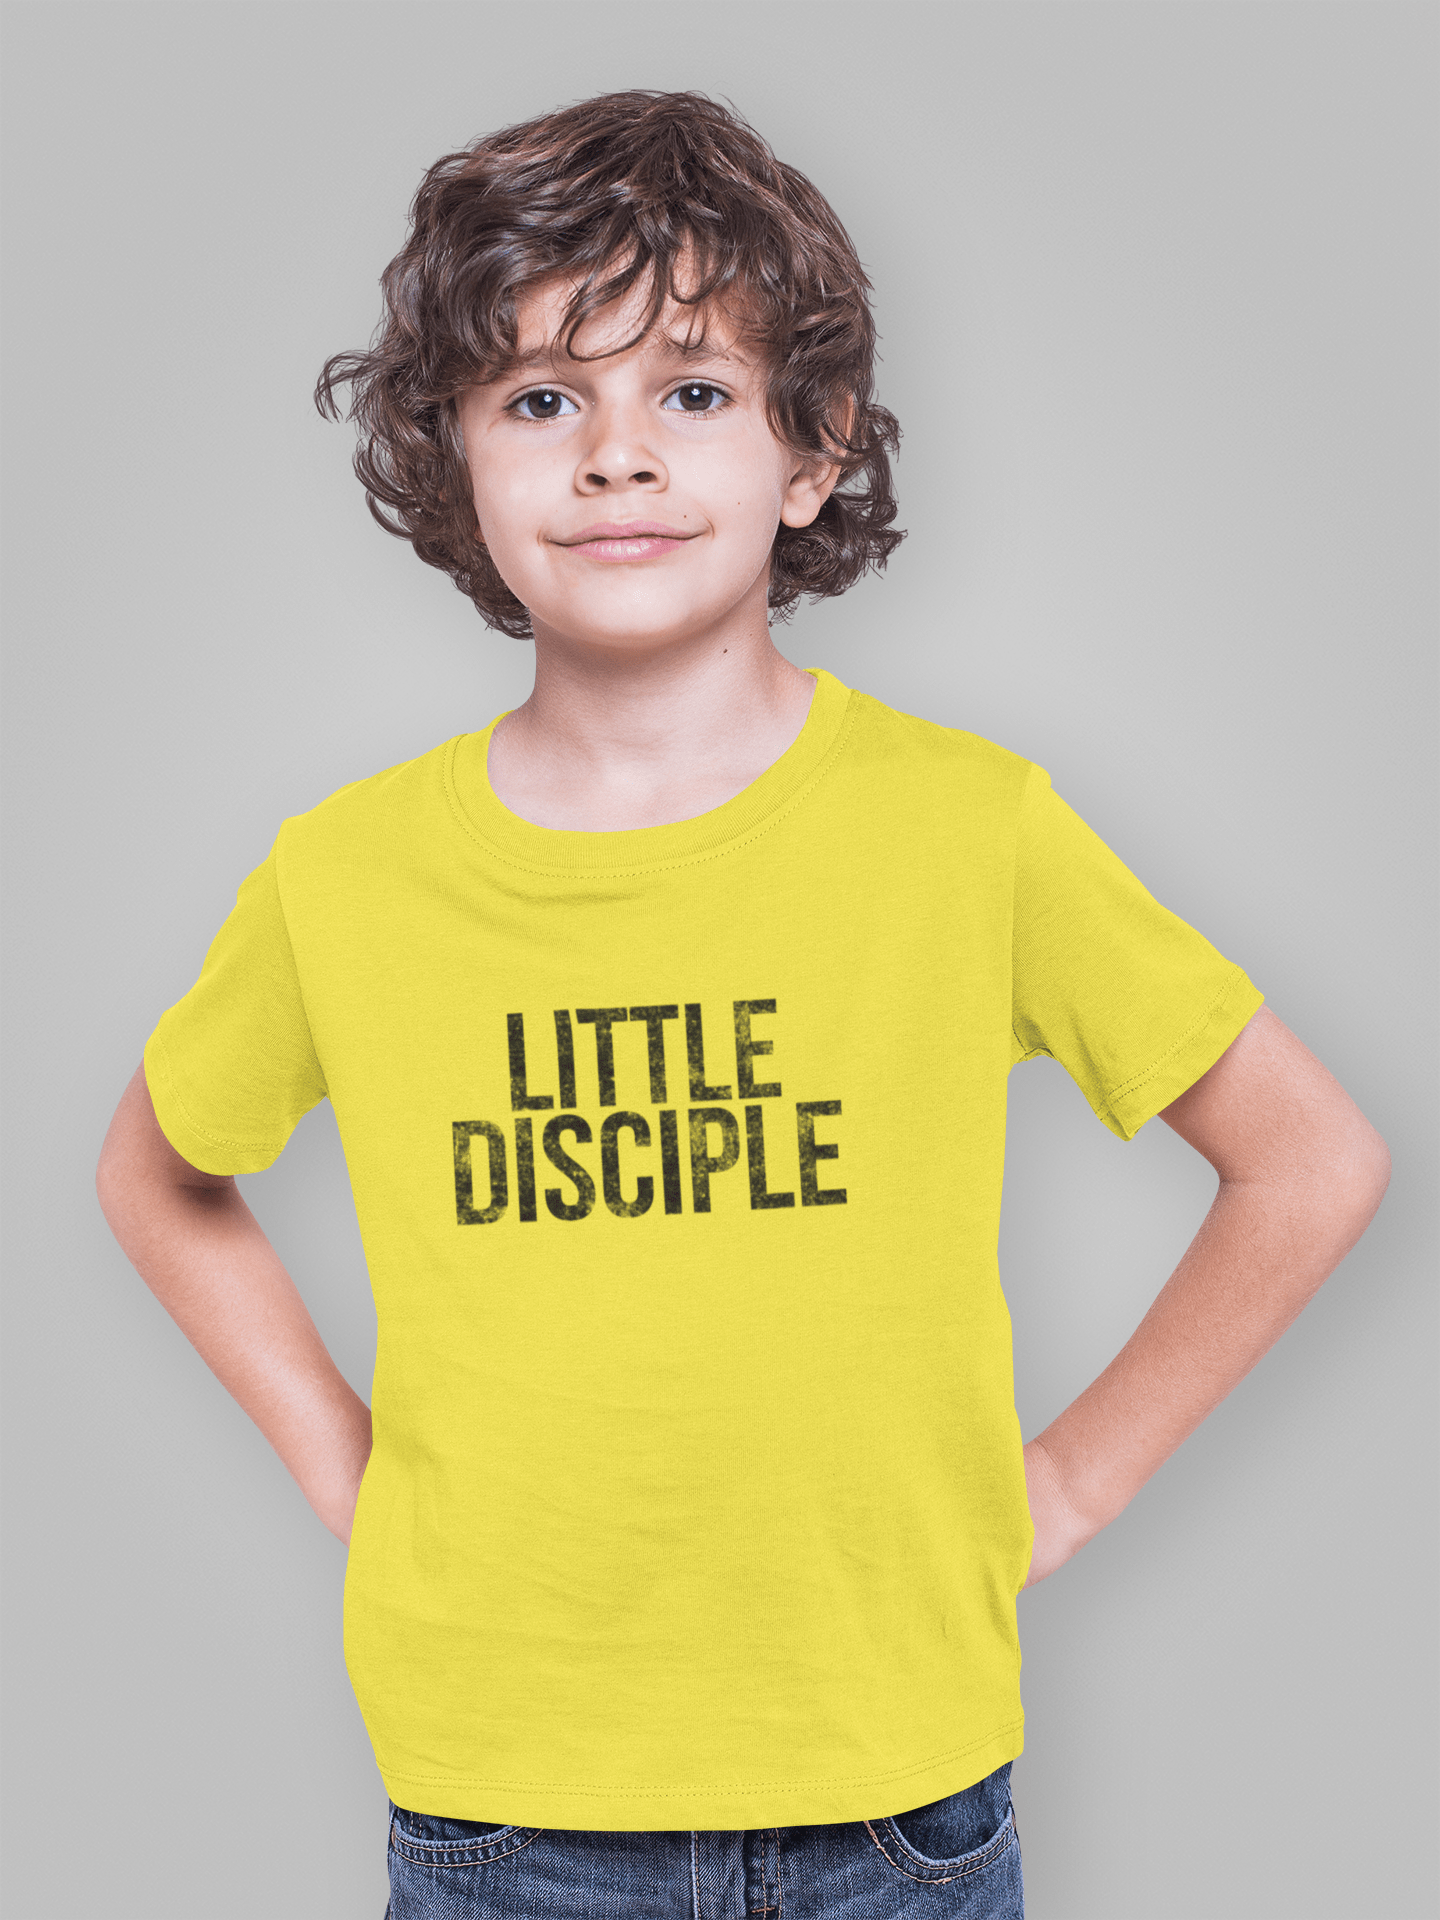 Living Words Boy Round neck Tshirt 0-12M / New Yellow LITTLE DISCIPLE